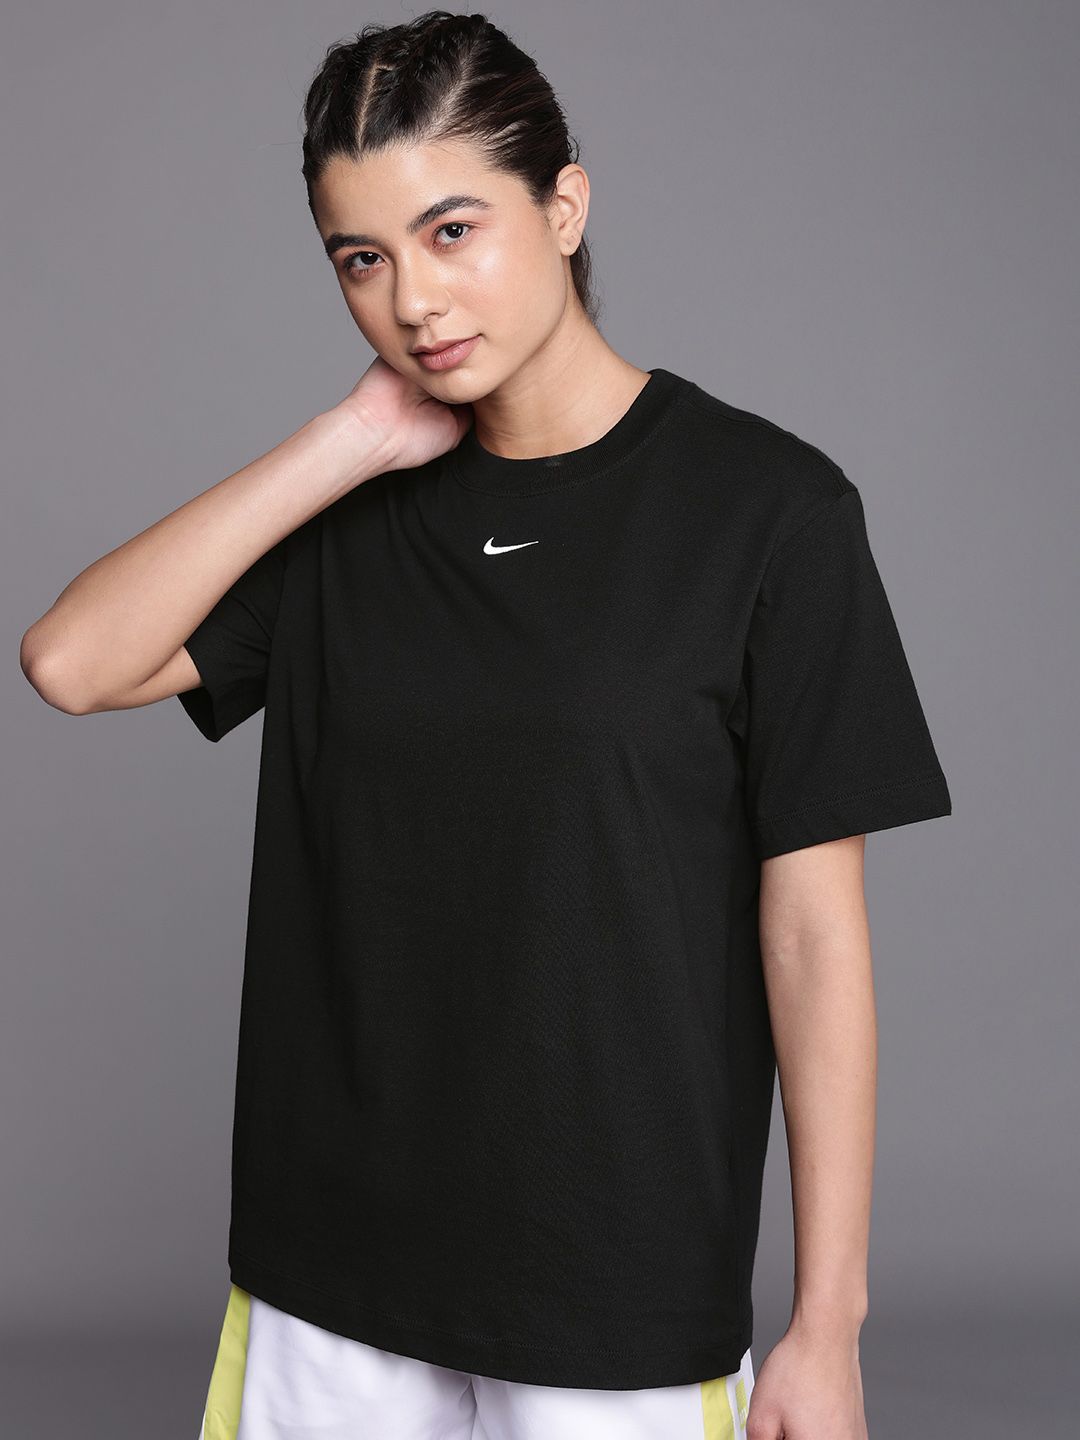 Nike Women Black T-shirt Price in India